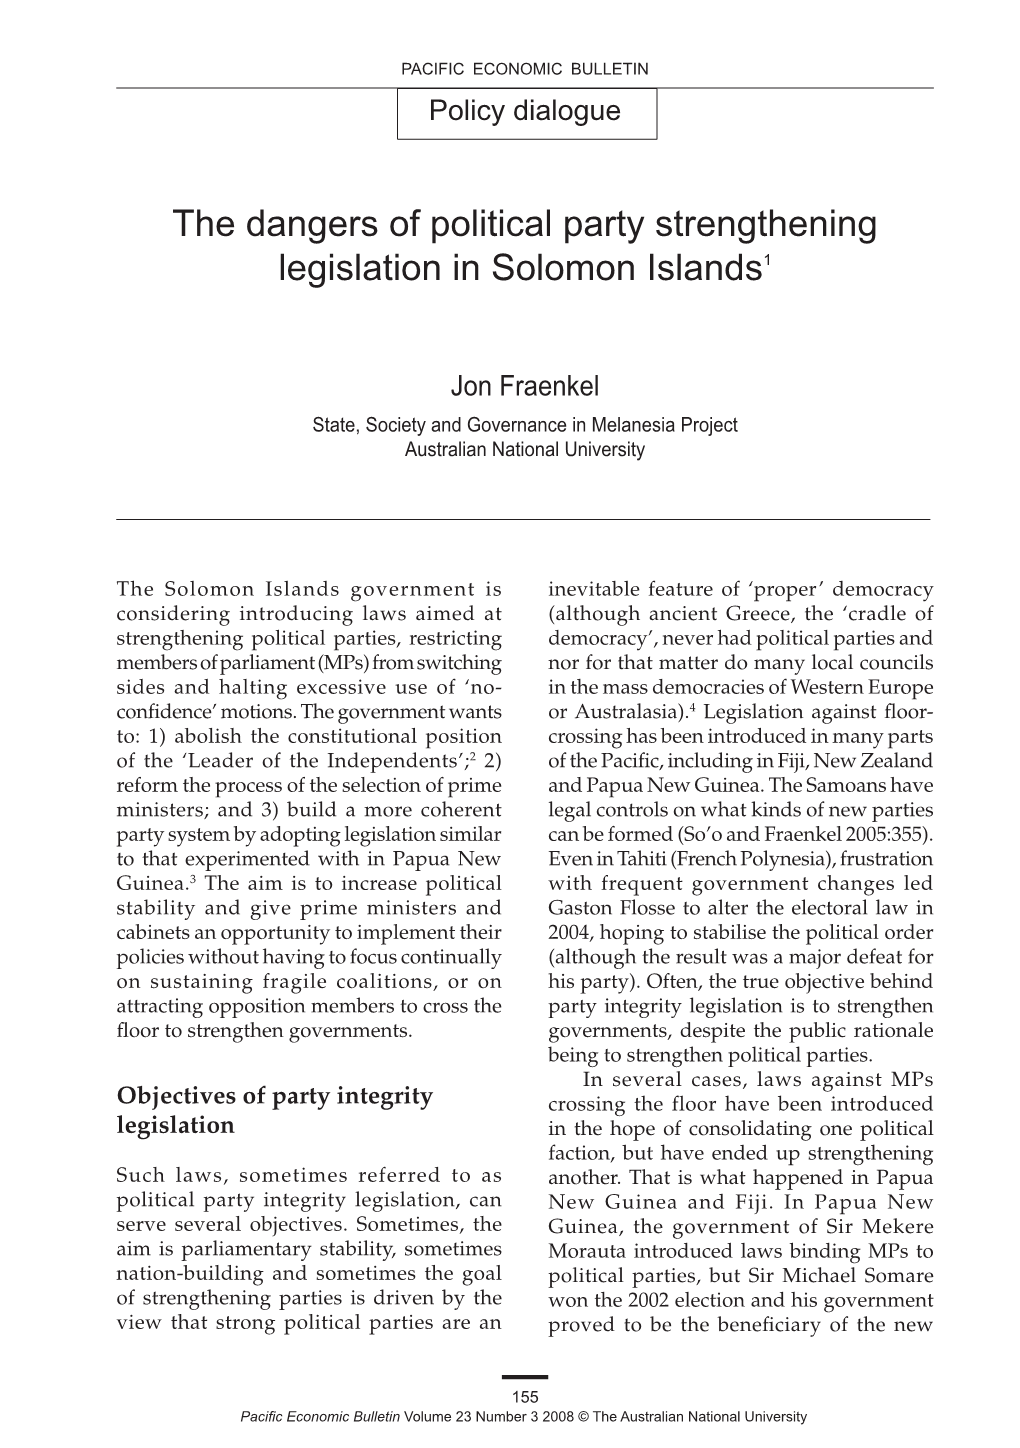 The Dangers of Political Party Strengthening Legislation in Solomon Islands1